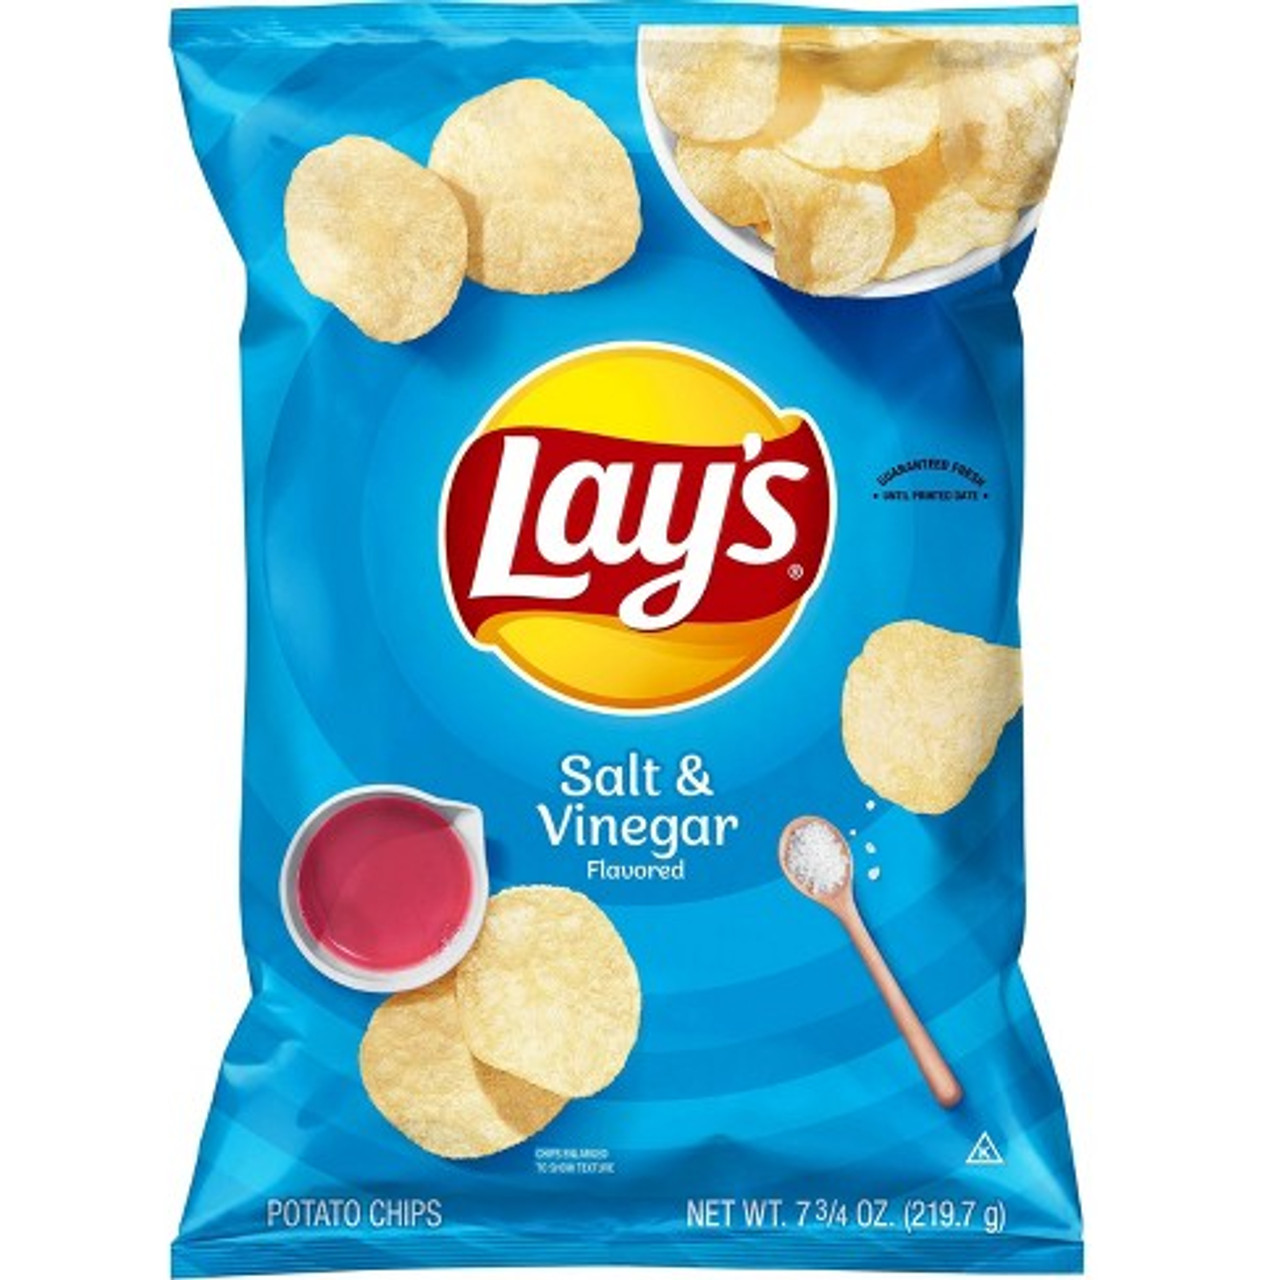 Lay's Barbecue Flavored Potato Chips - 7.75oz